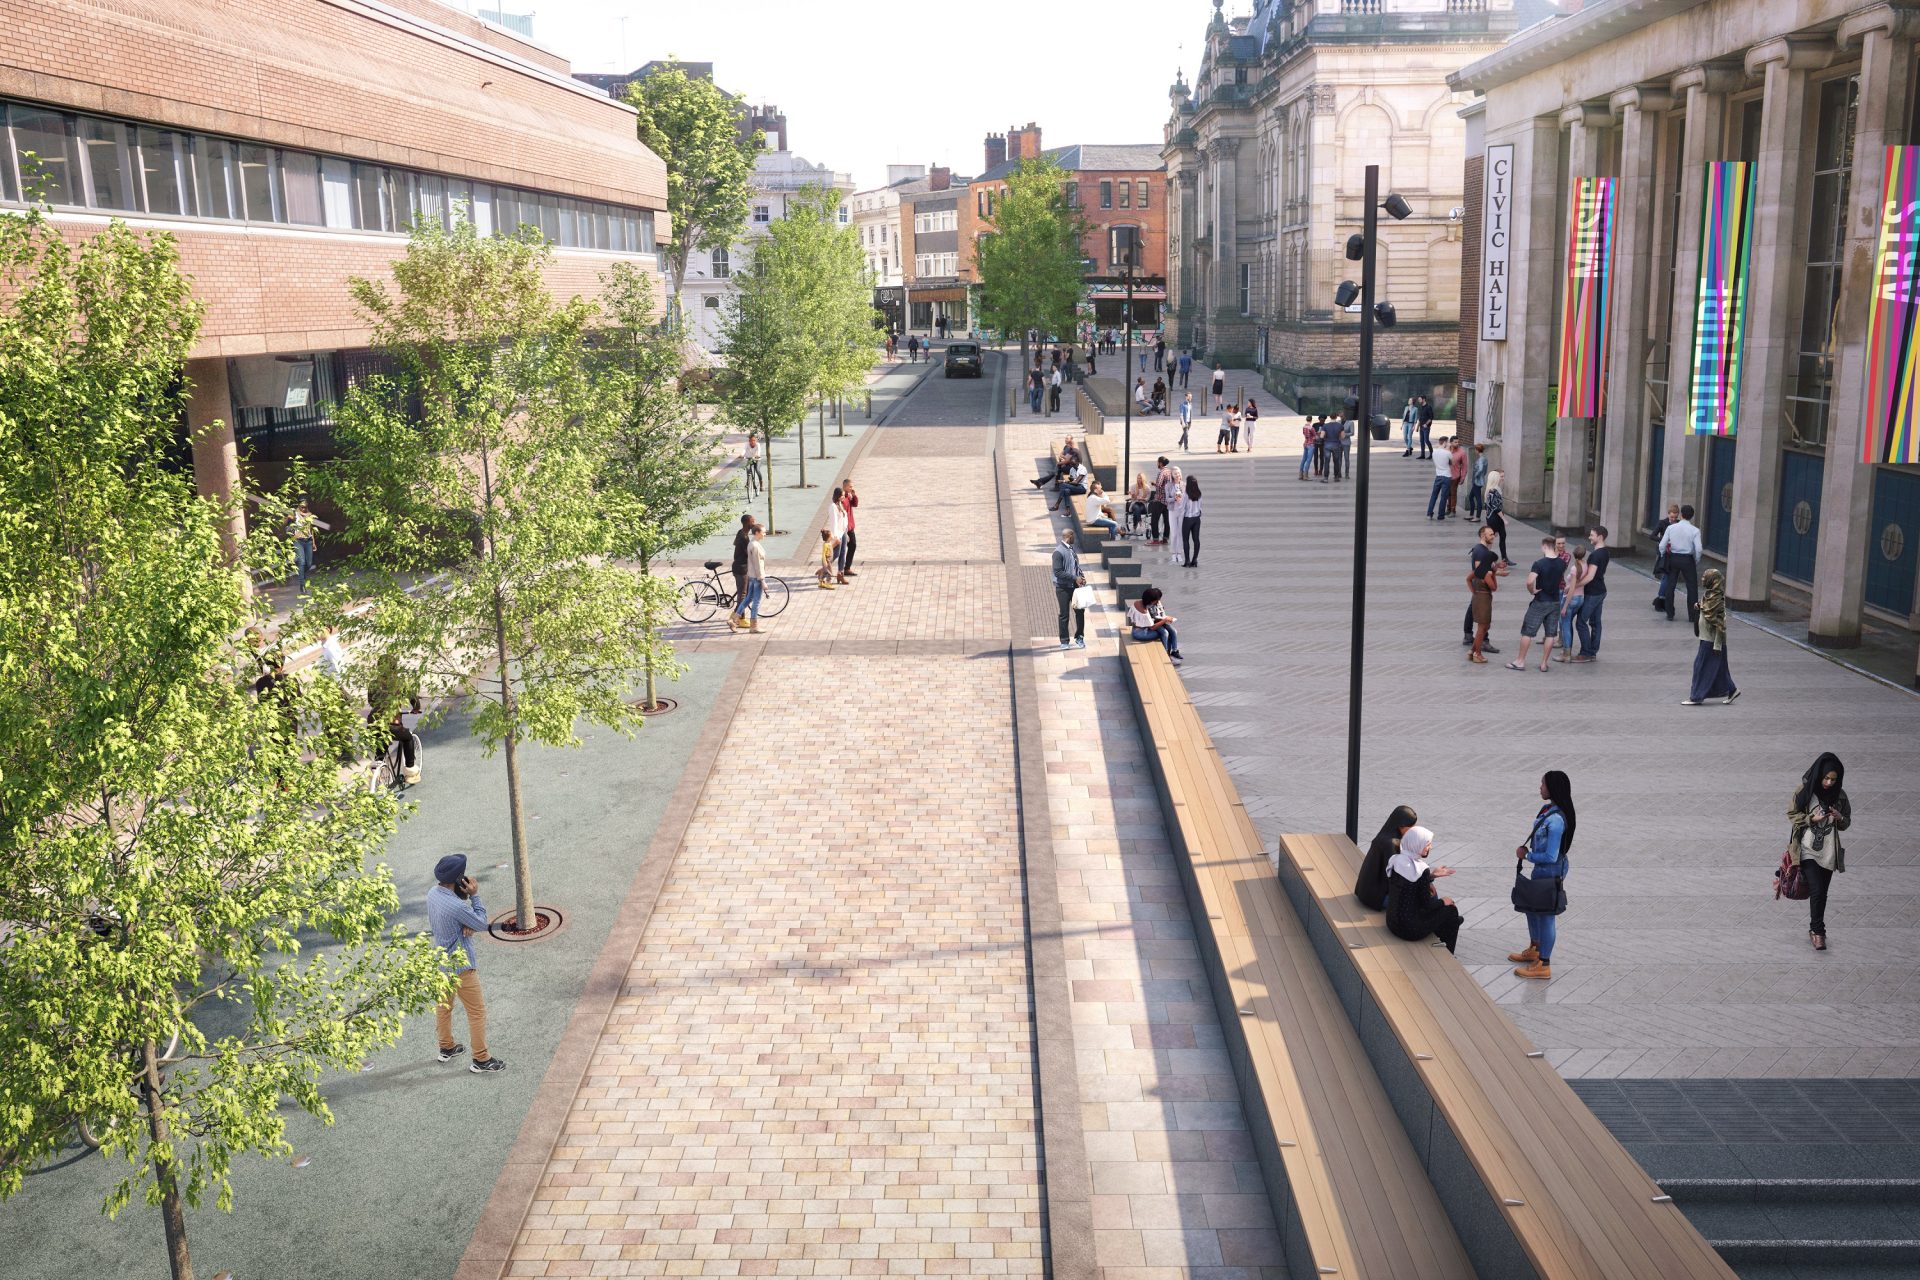 Major facelift to get underway to boost street scene around Civic Halls